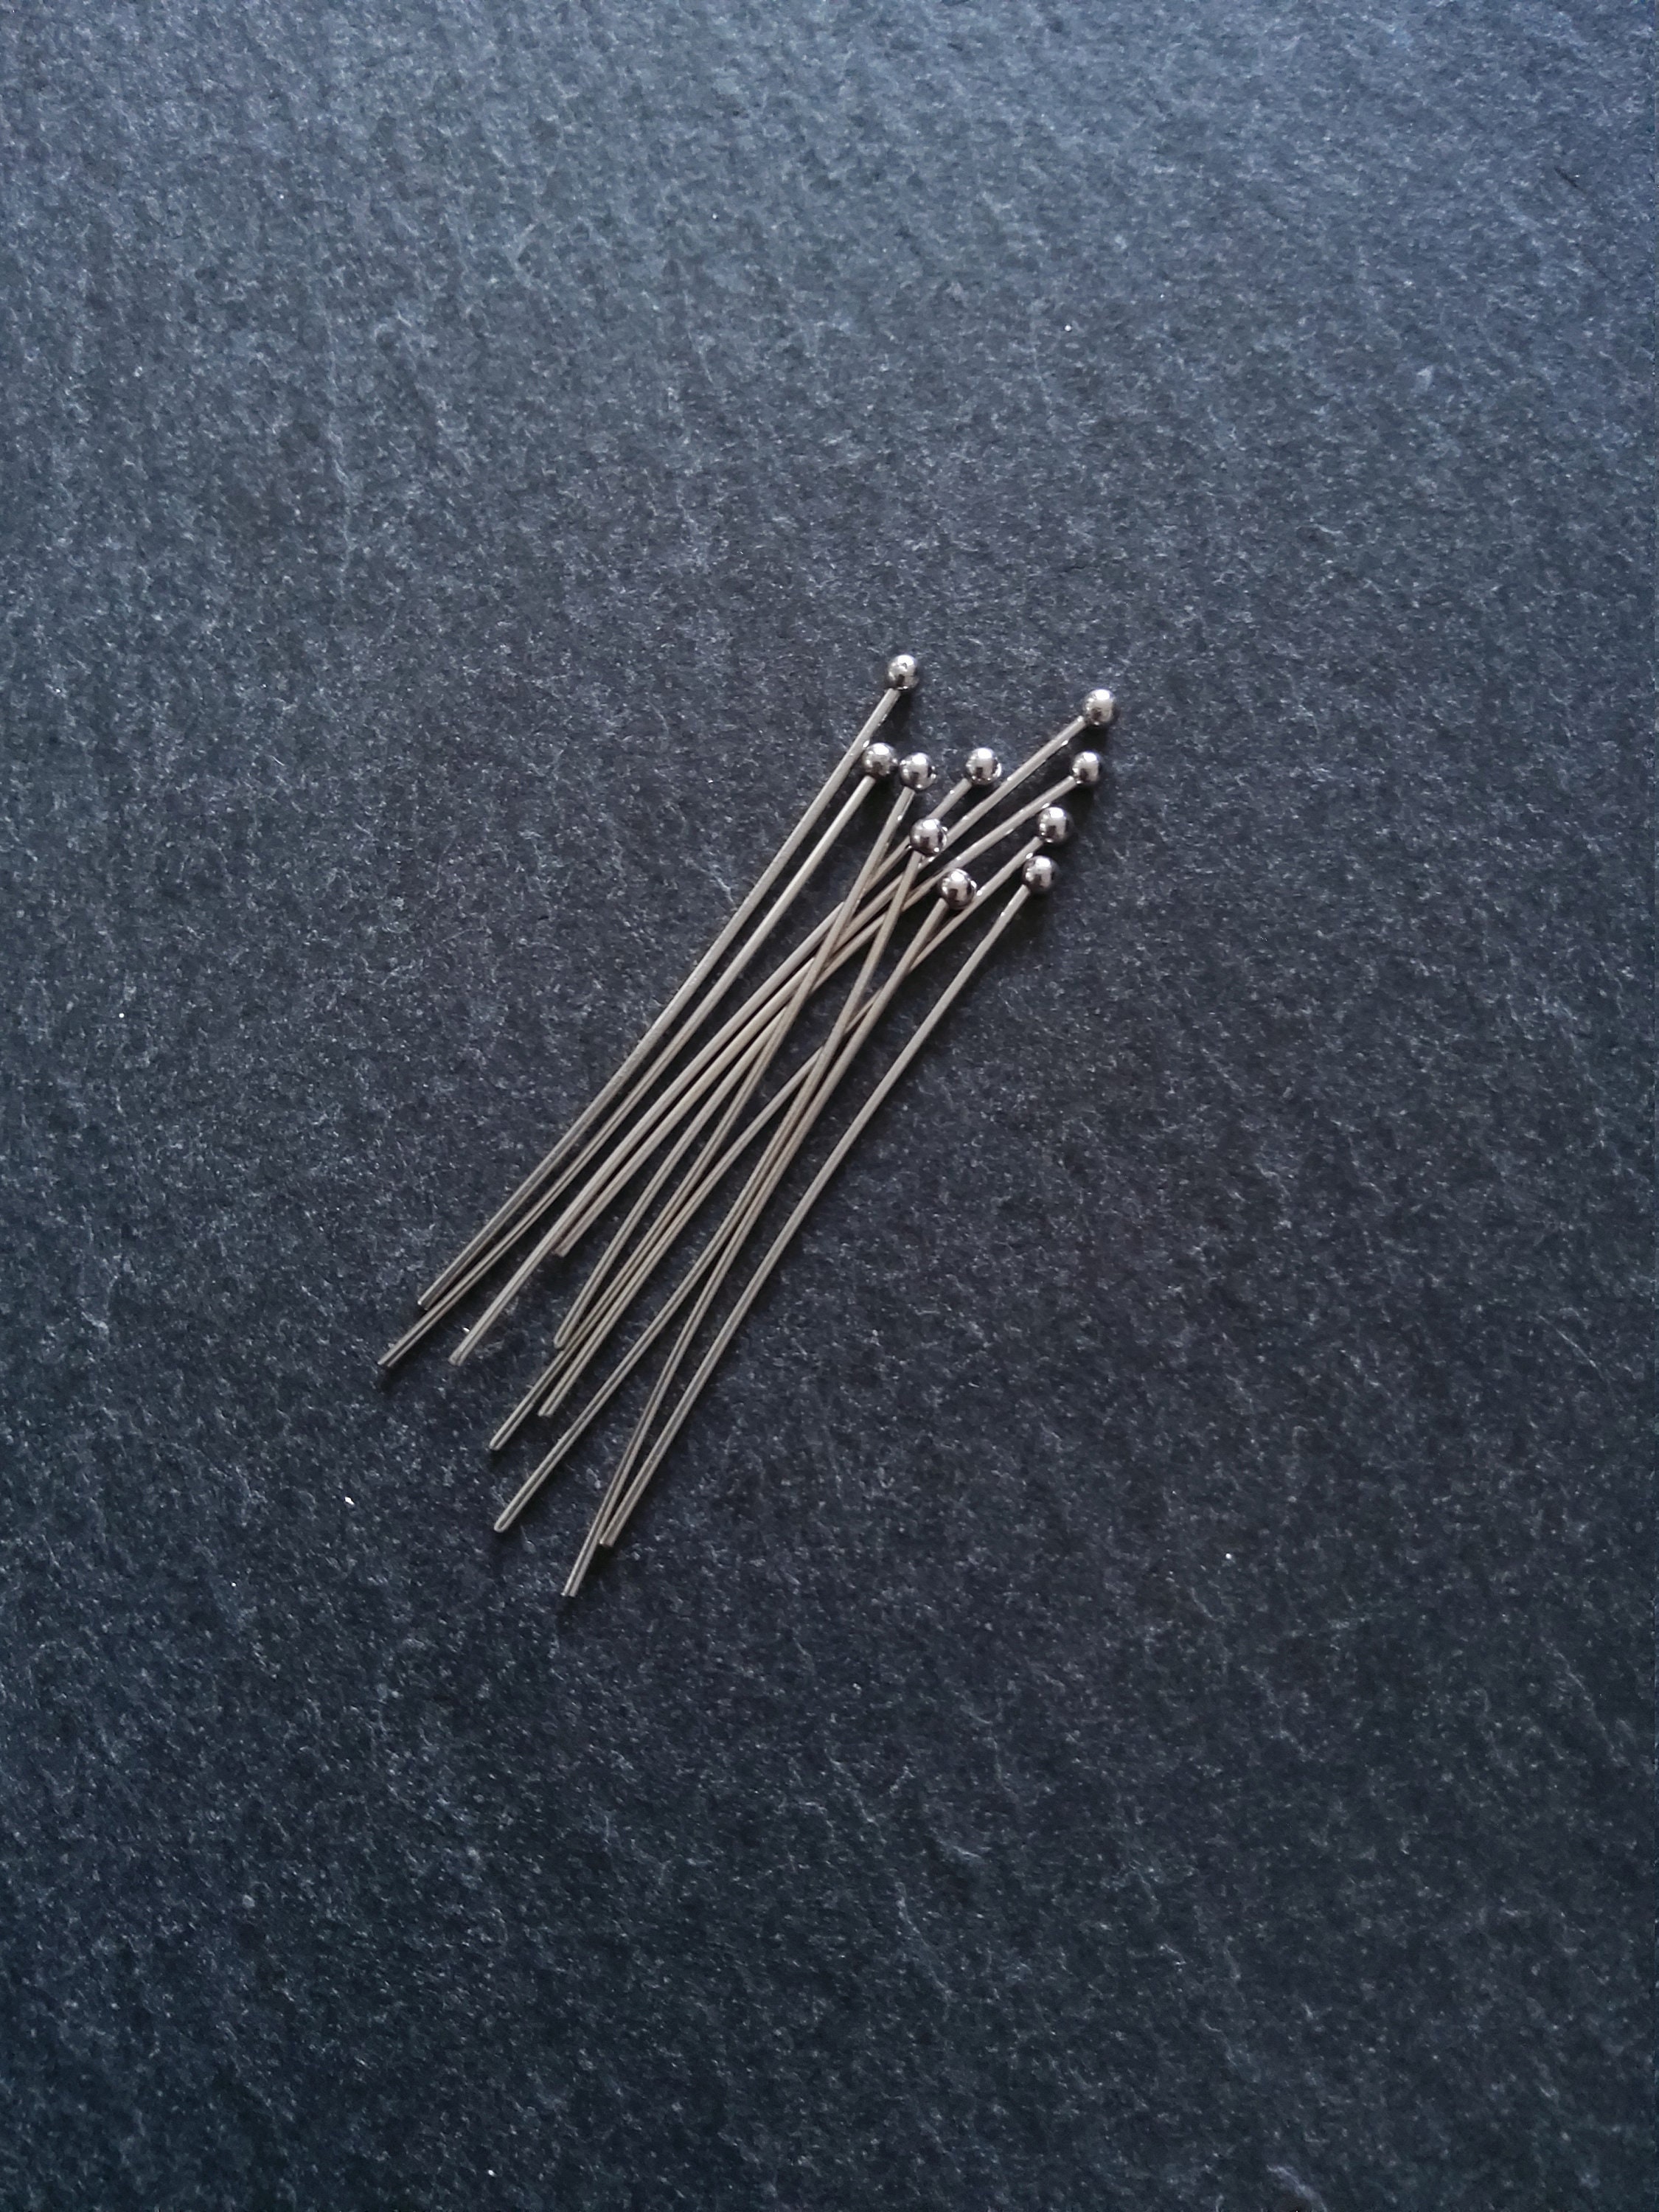 400Pcs Silver Straight Pins 30mm Headpins Flat Head Pins For